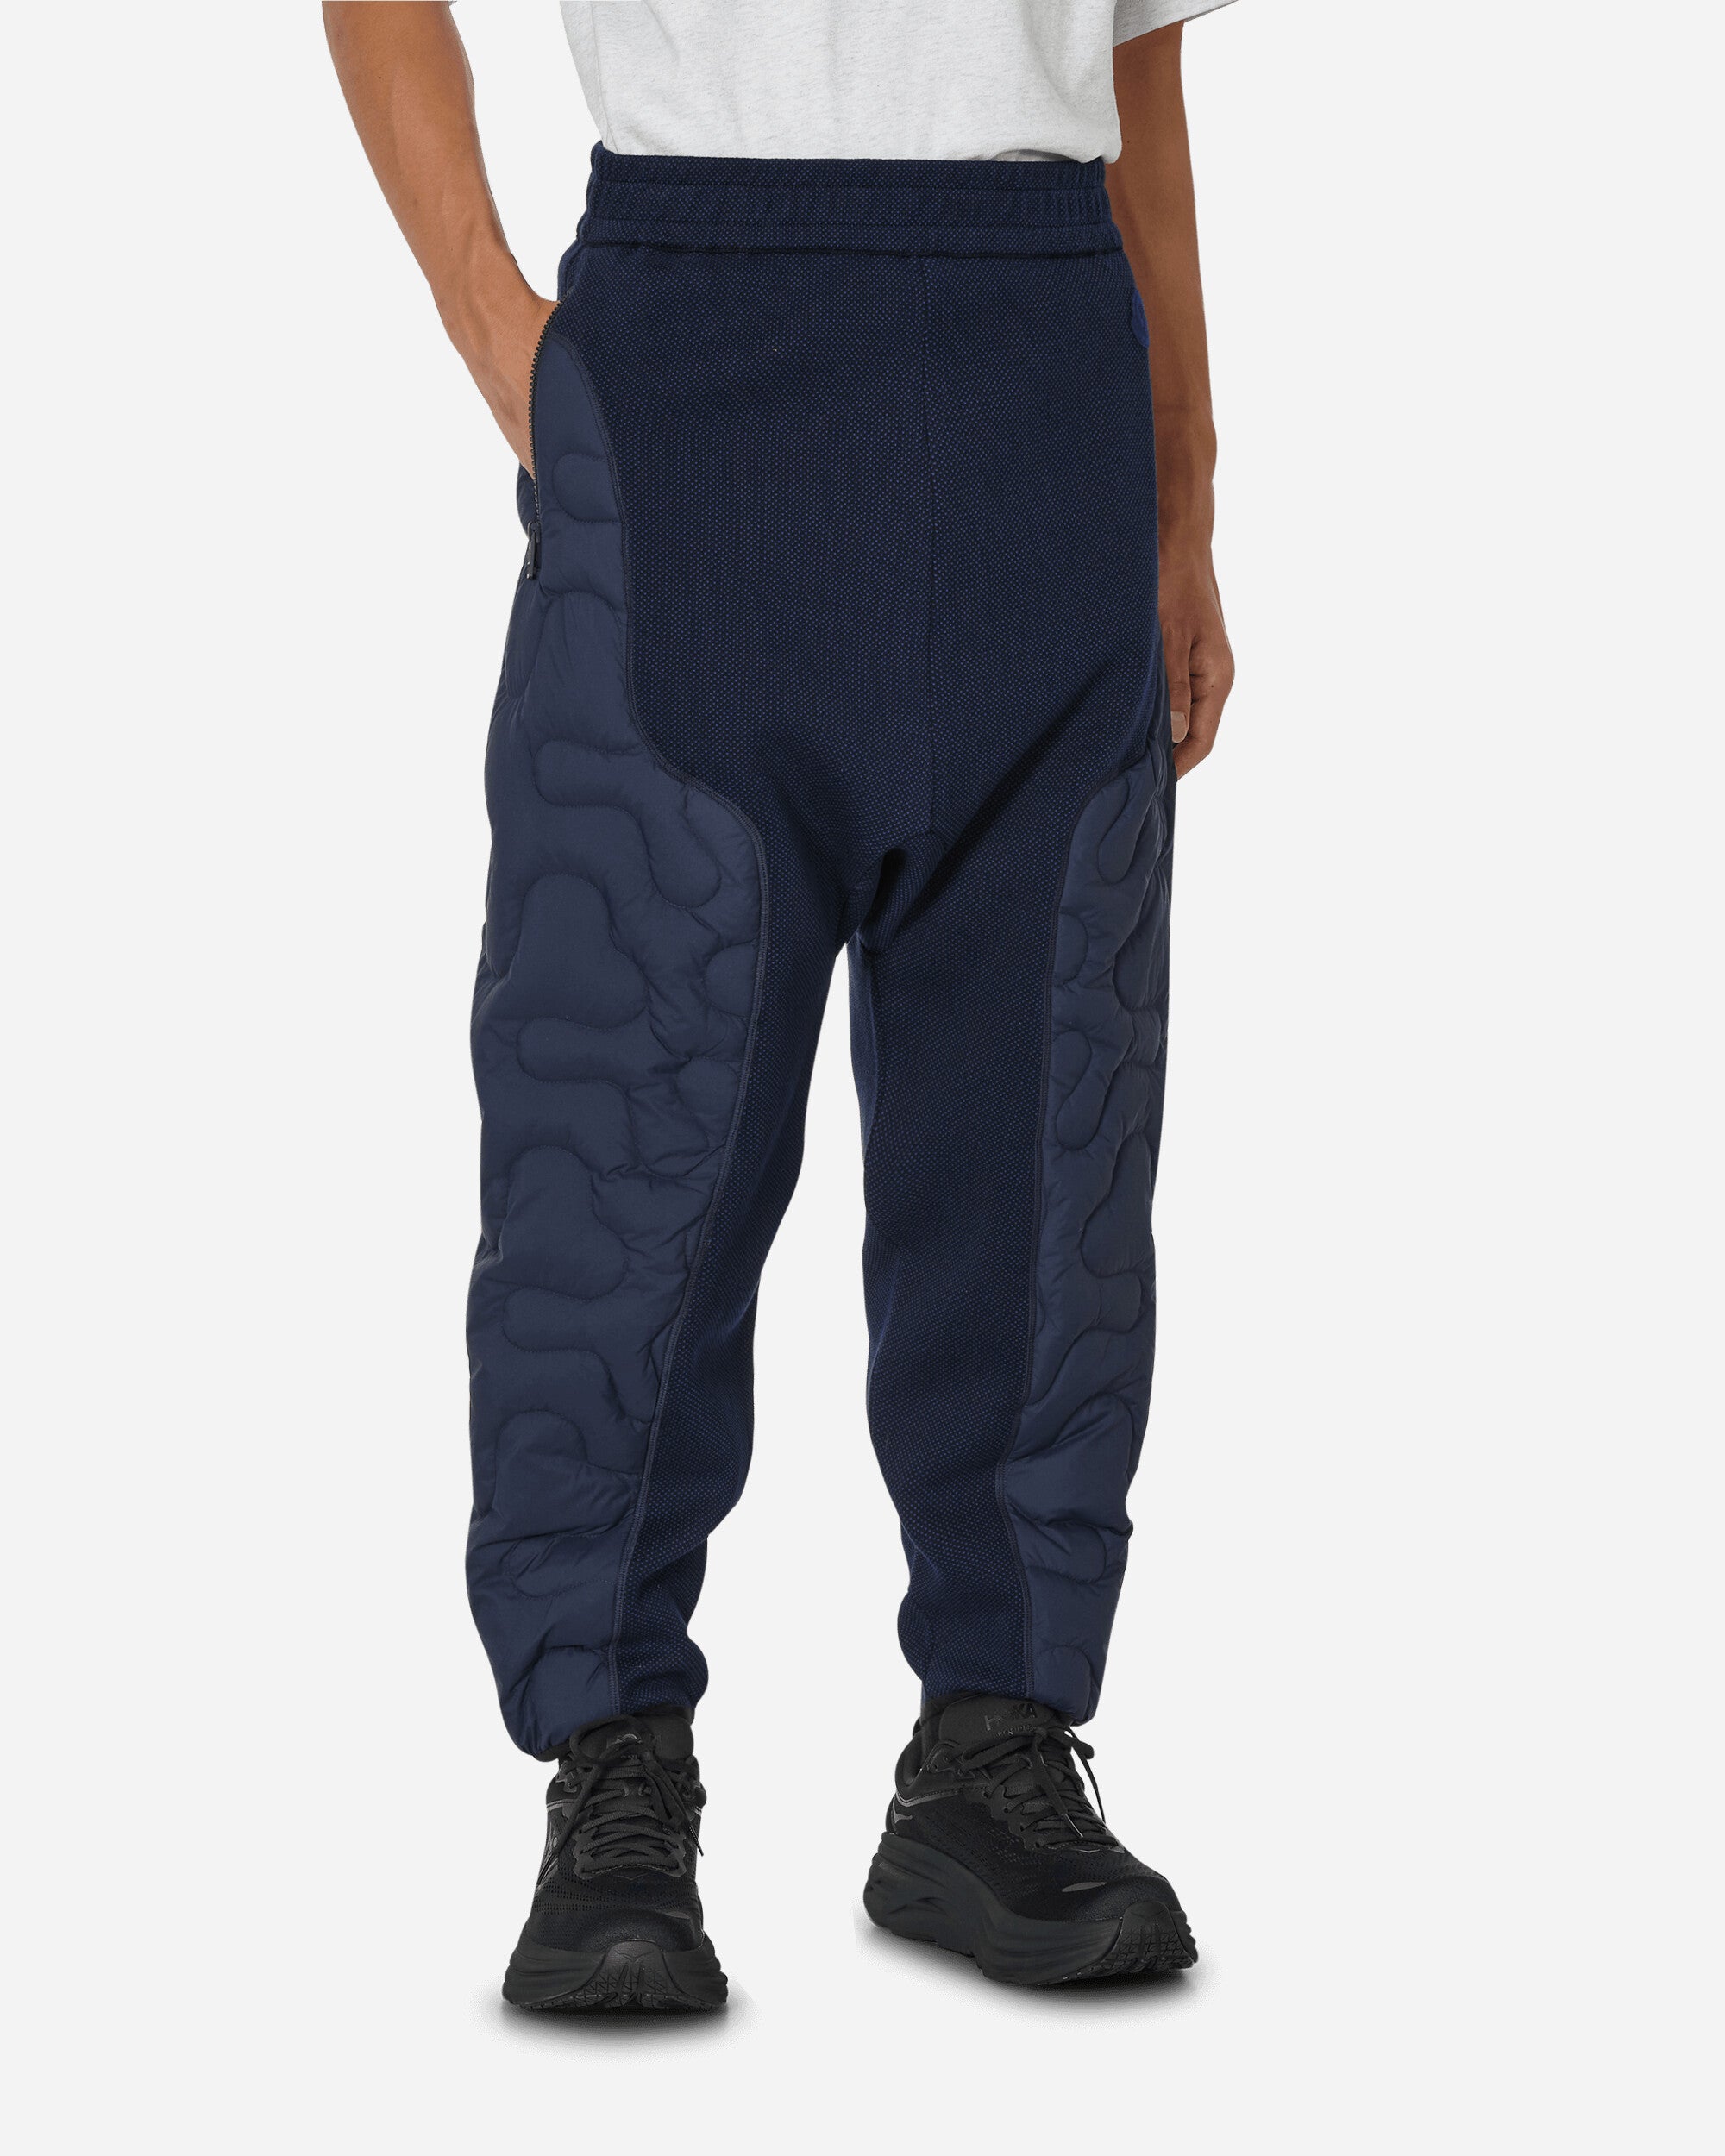 Moncler Genius Jersey Bottom X Salehe Bembury Navy Pants Sweatpants 8H00001M3277 778